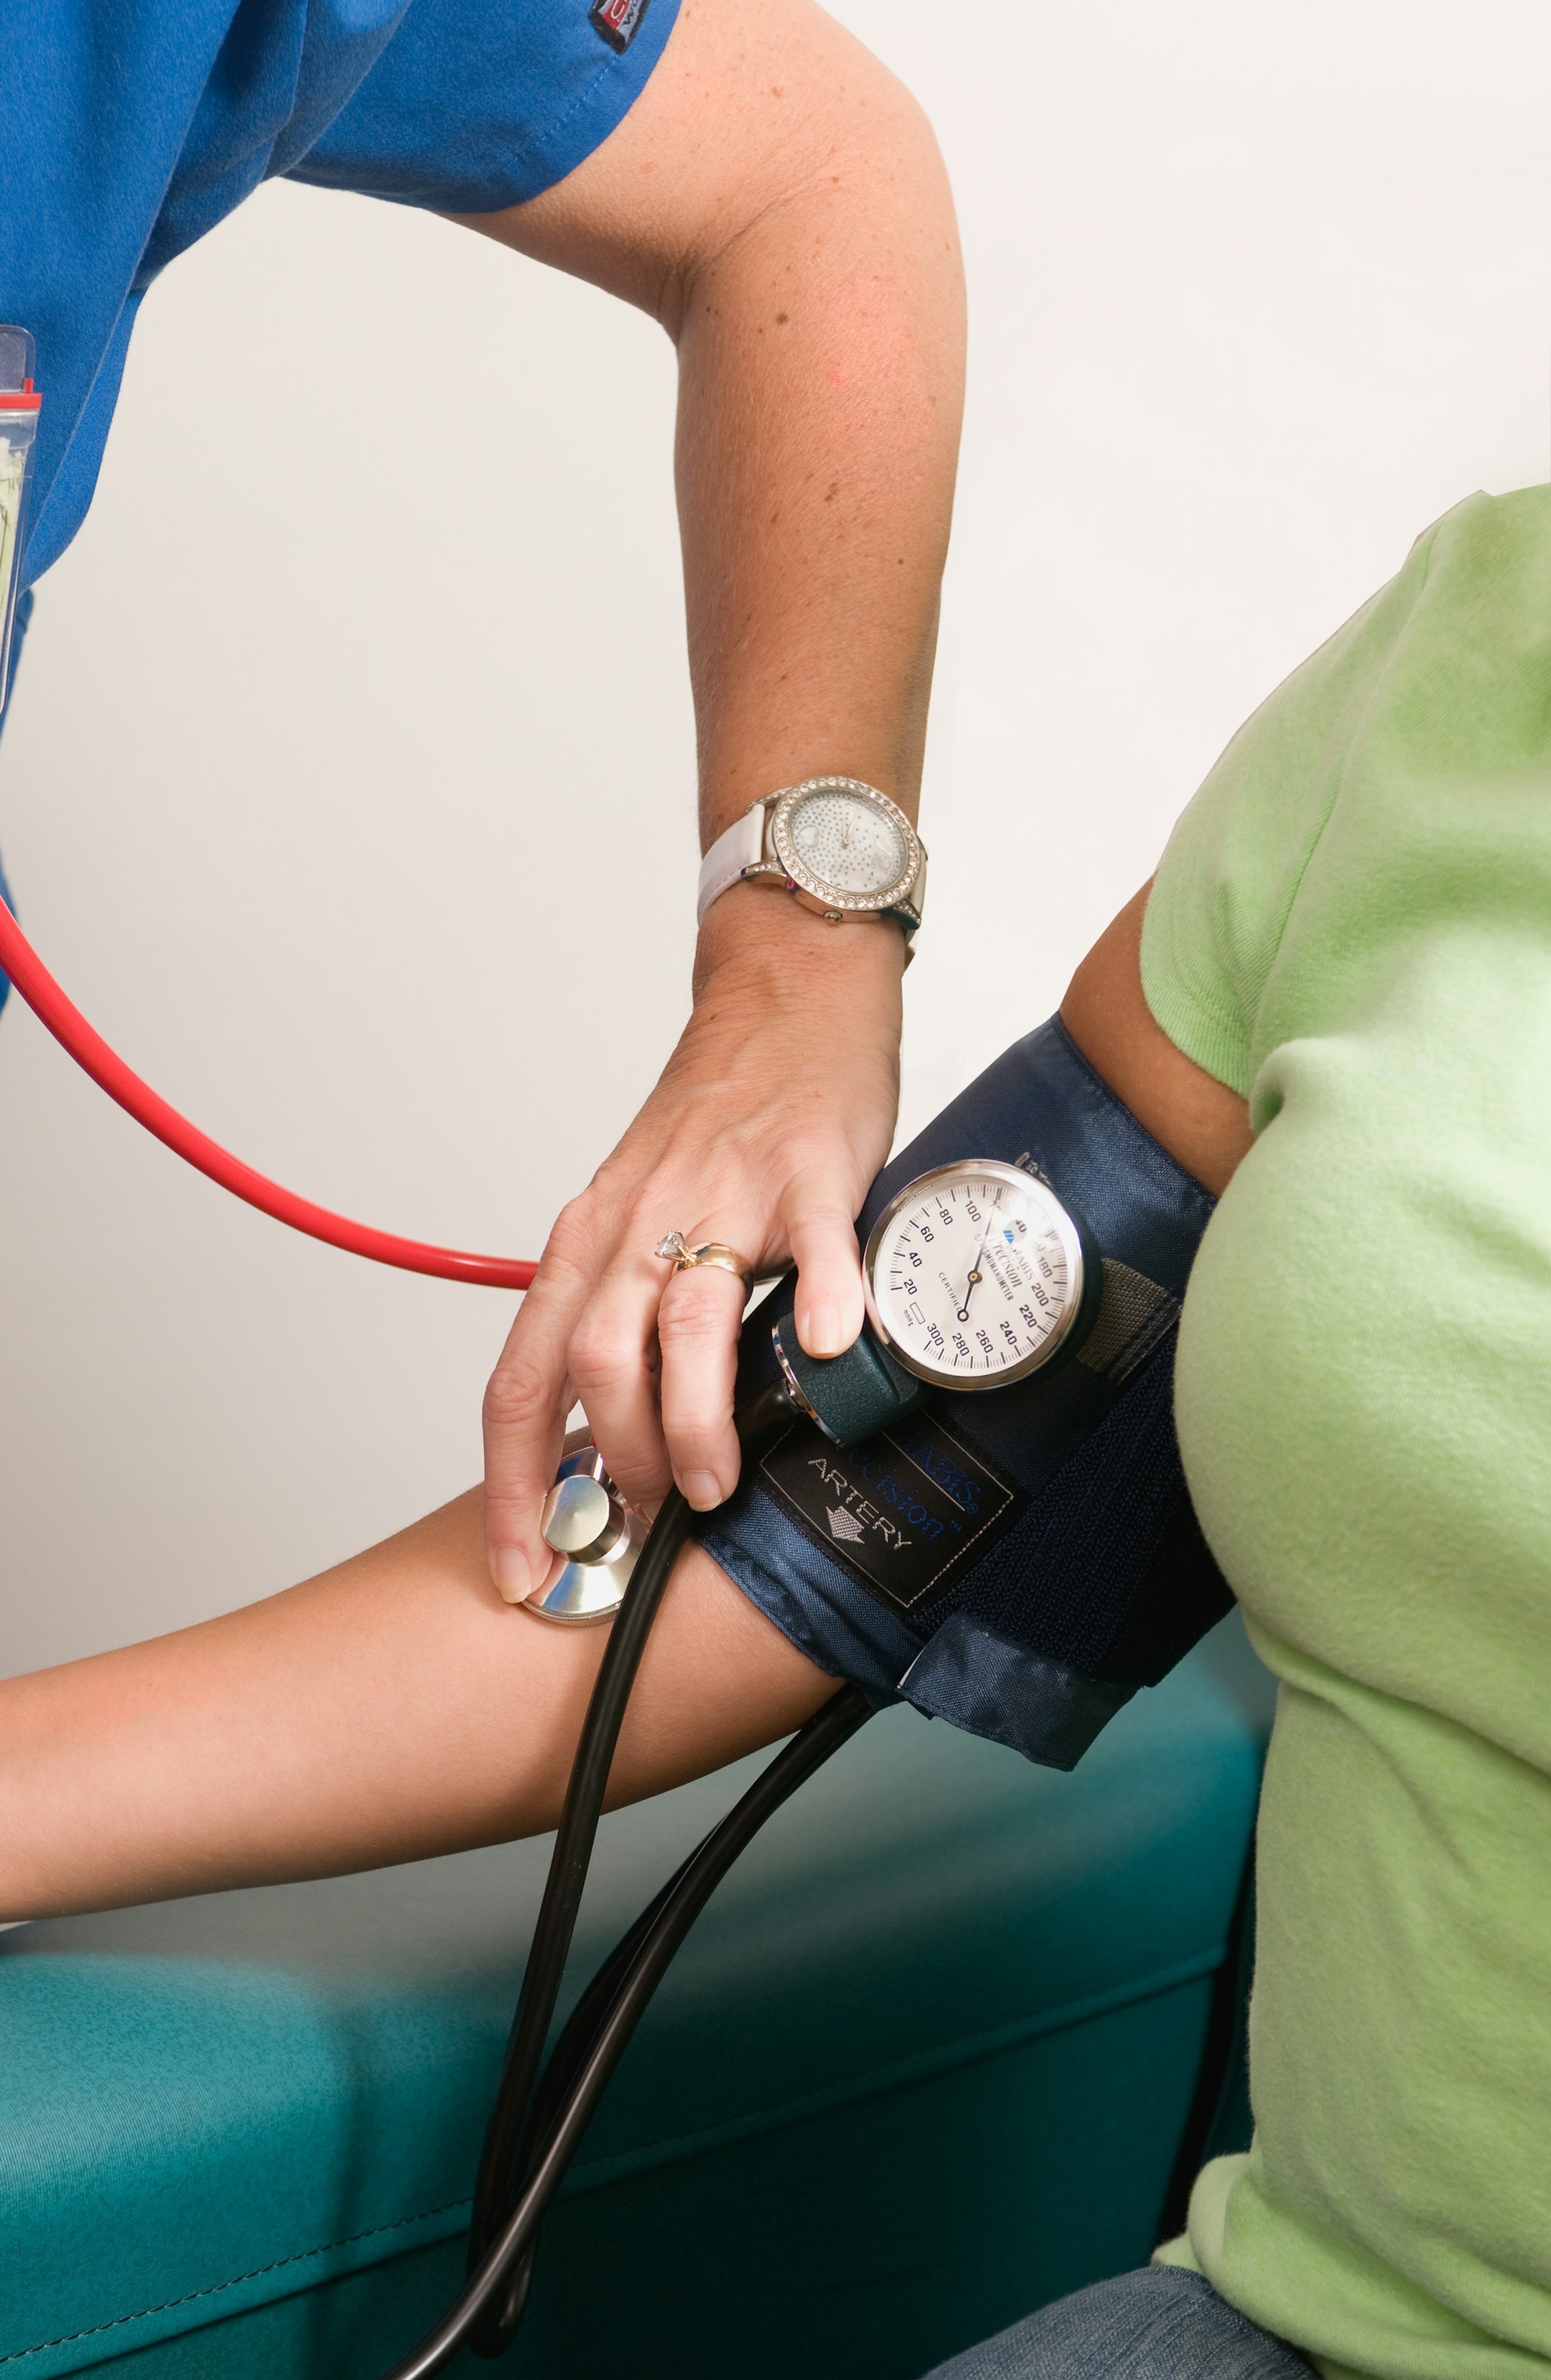 High Blood Pressure: Causes and Symptoms - PSRI Hospital